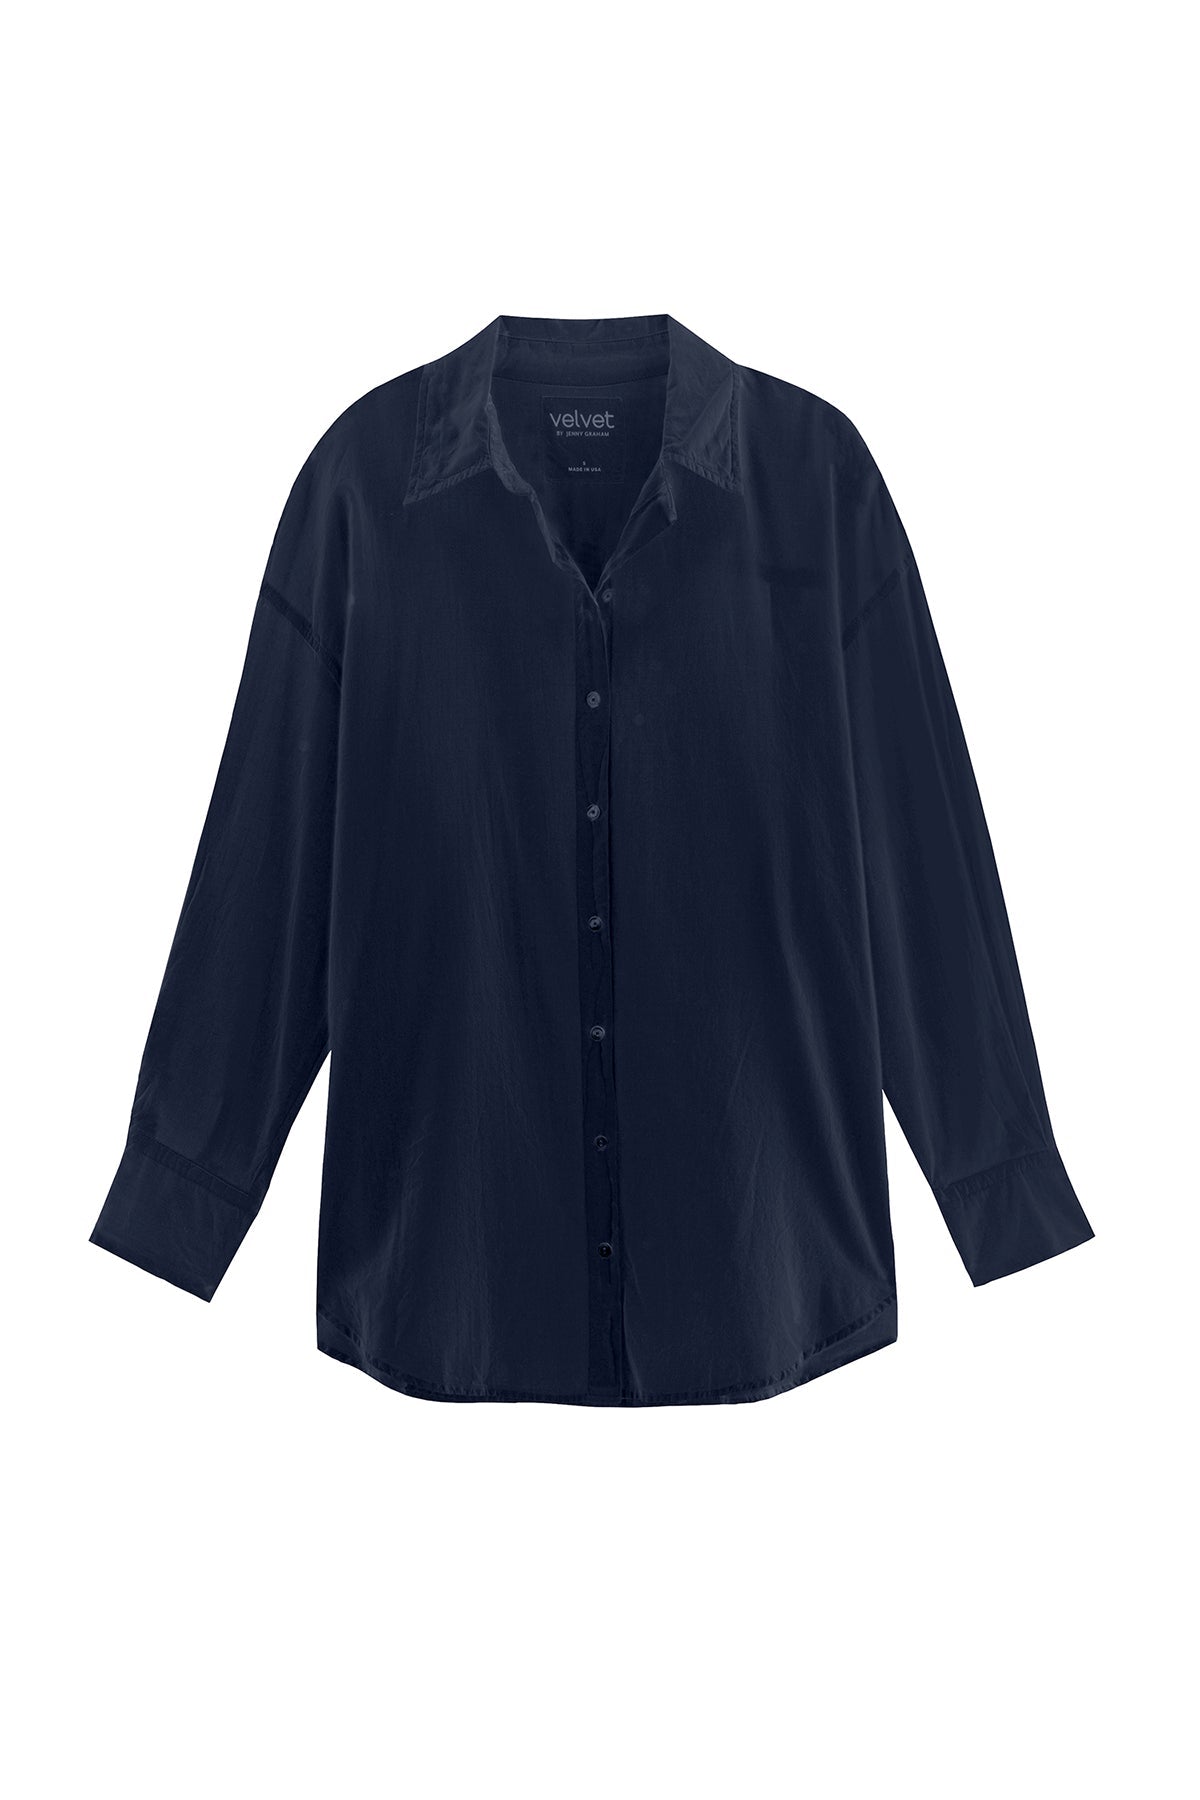 Redondo Button-Up Shirt in navy flat-26631701627073